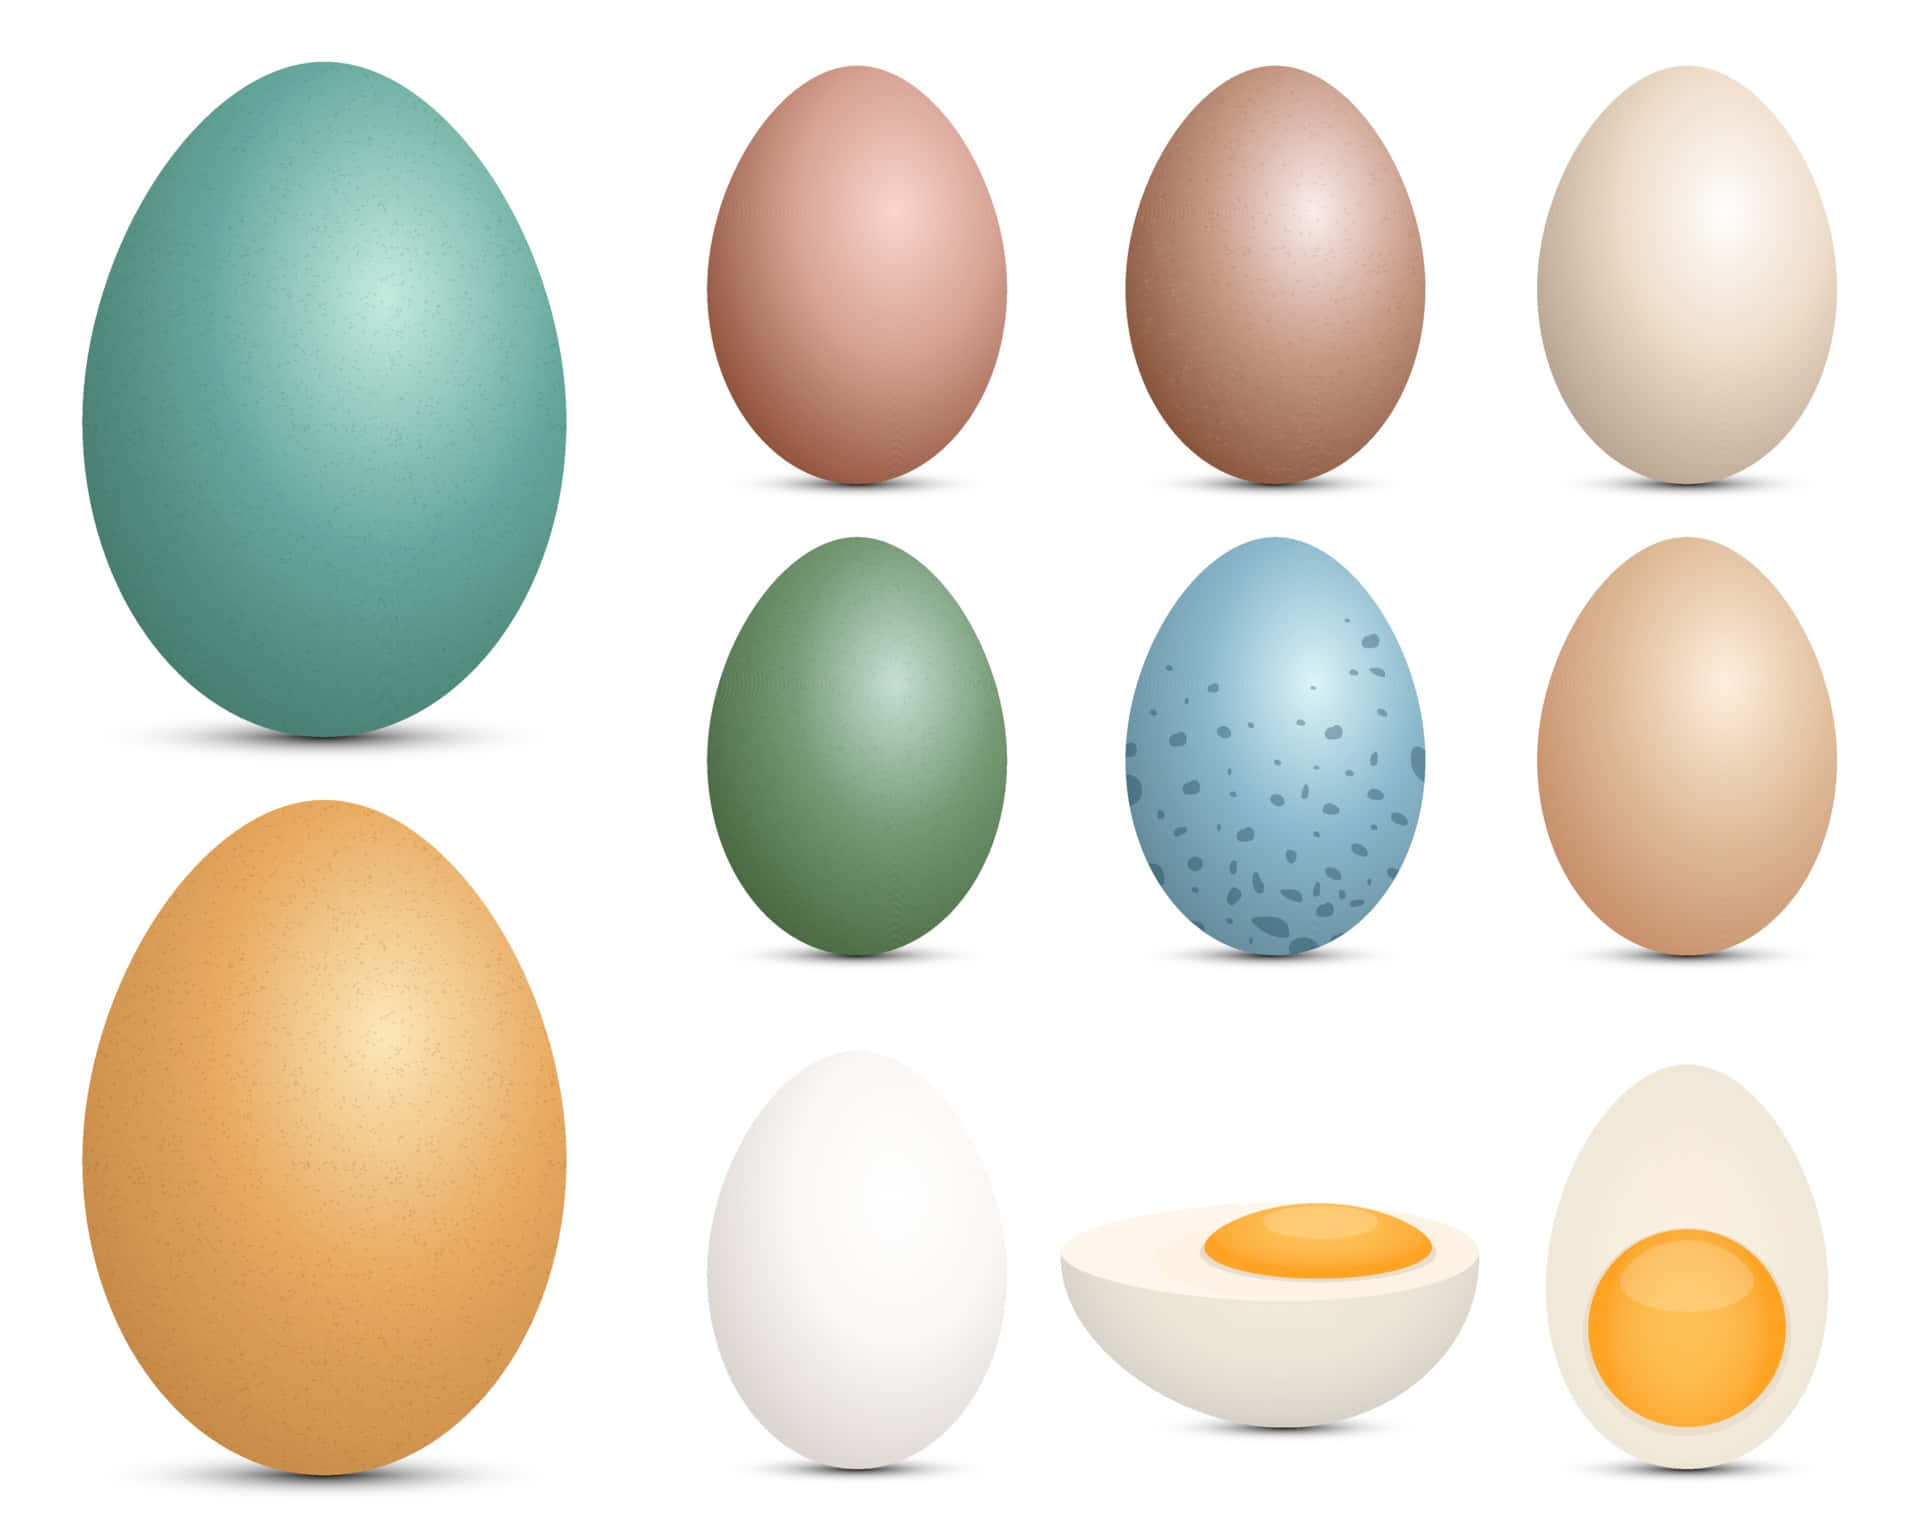 A Fresh, Brightly Colored Egg